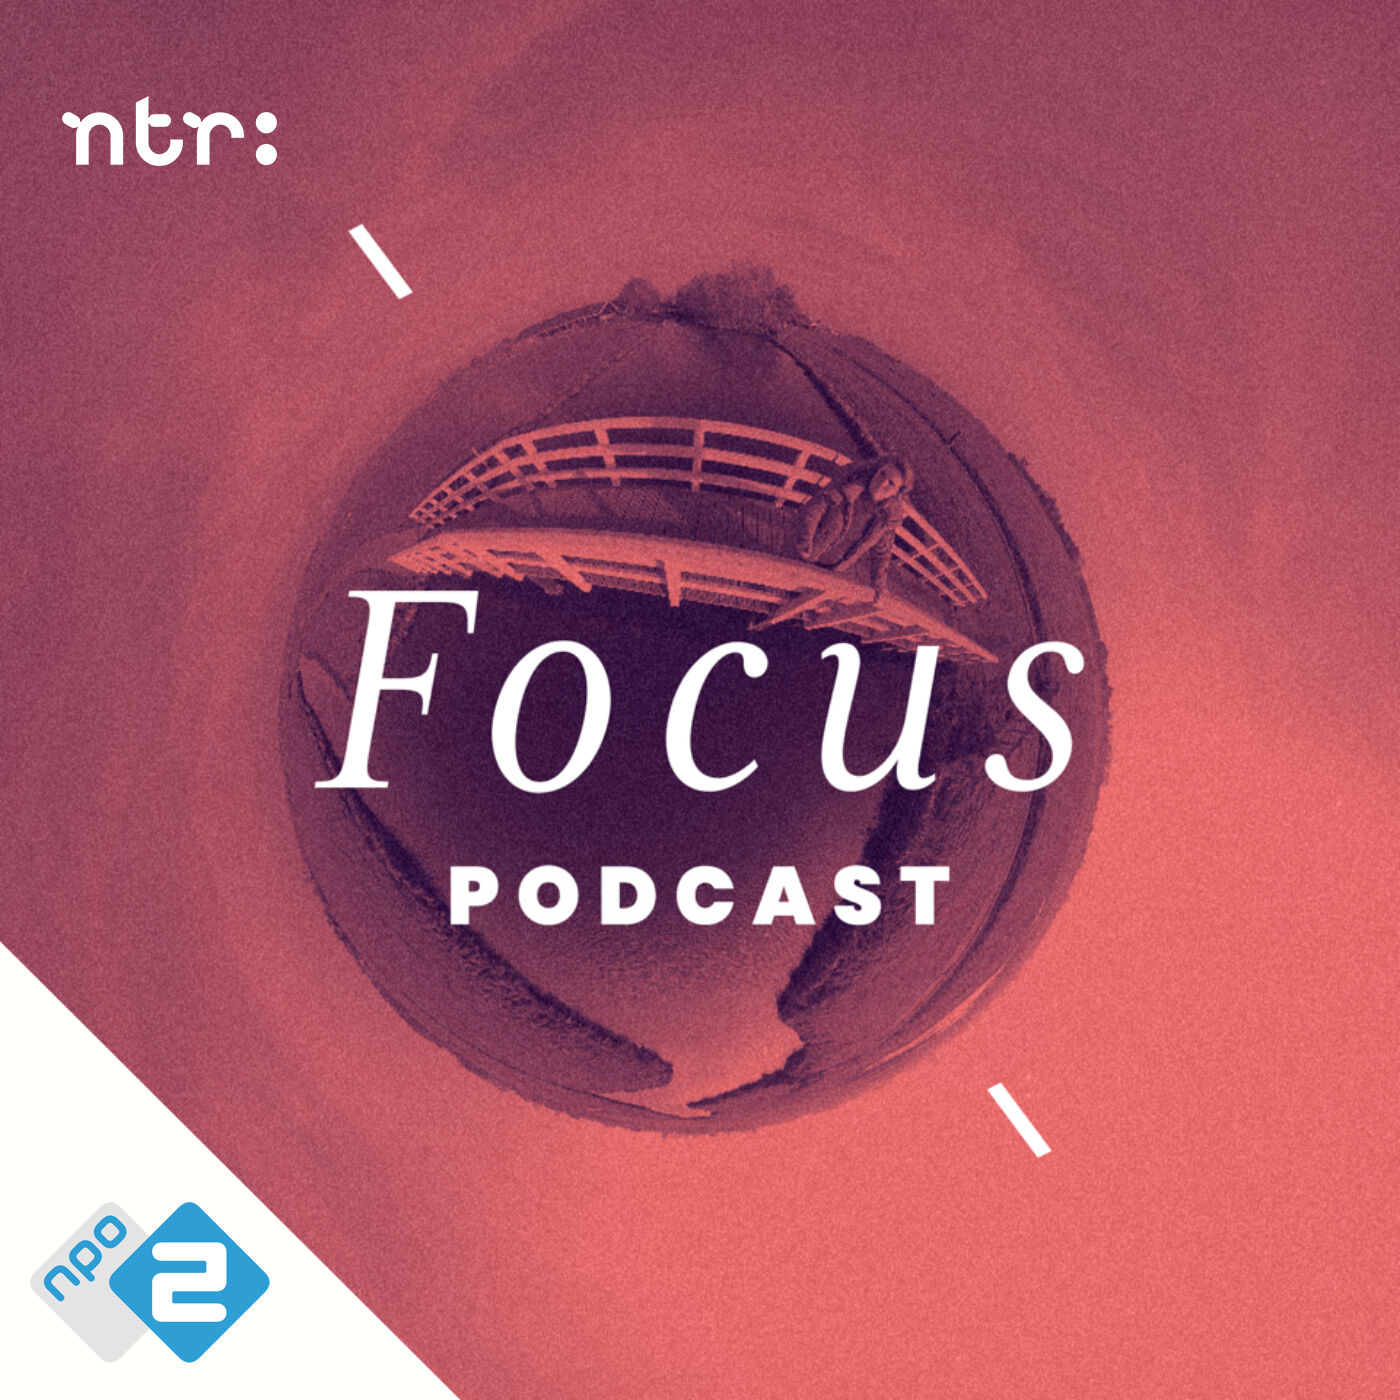 Focus podcast show image